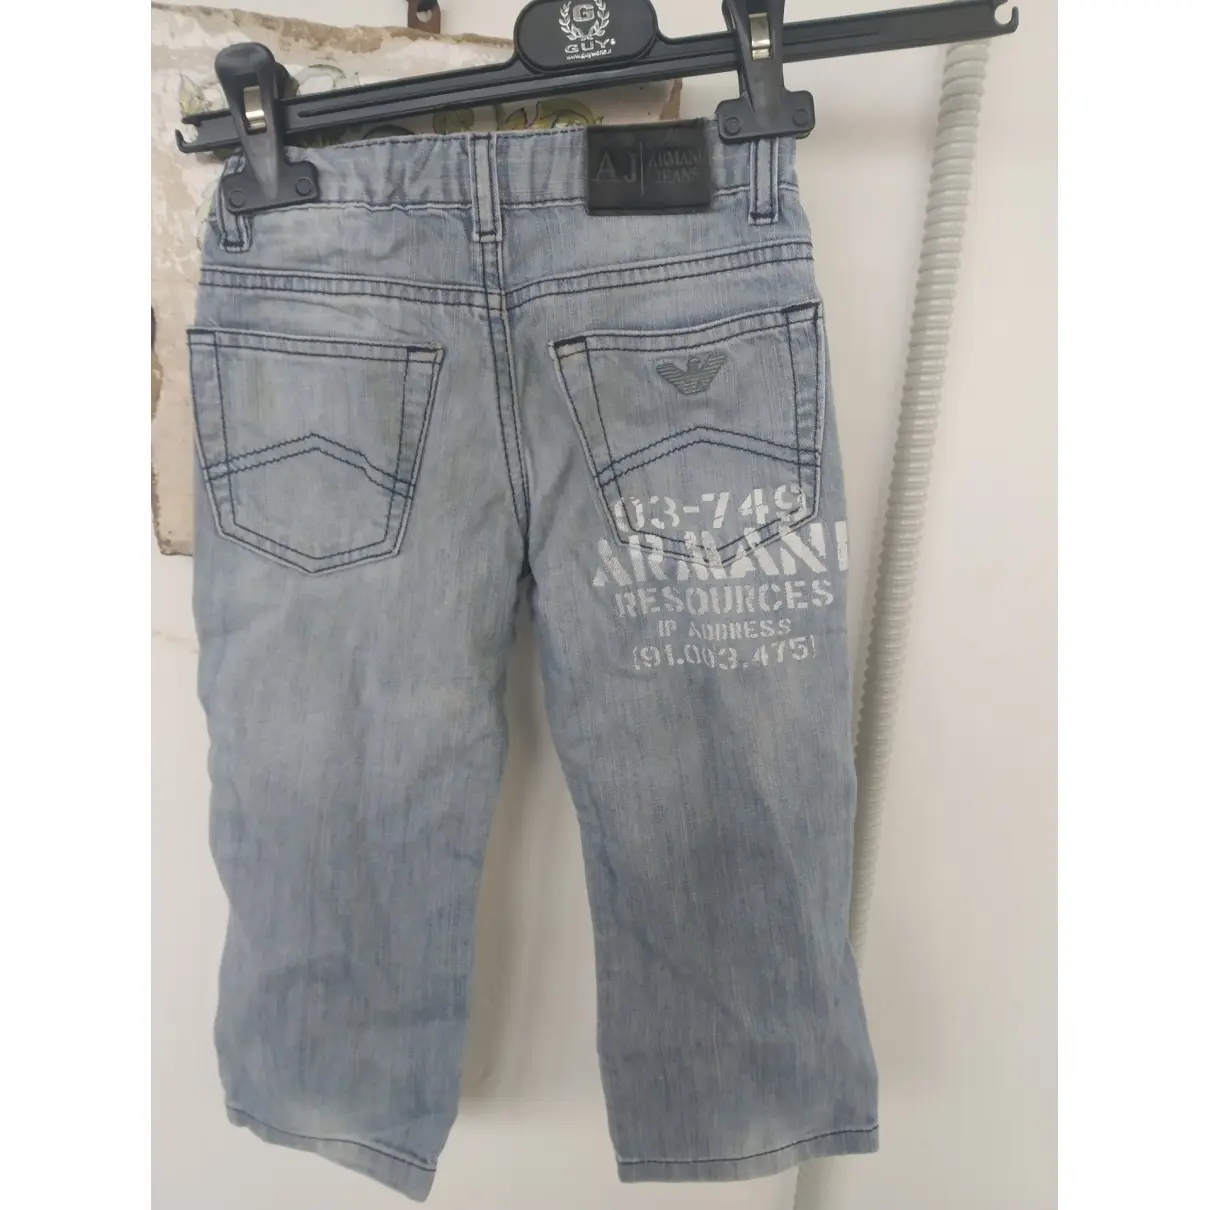 Armani Jeans Jeans for sale